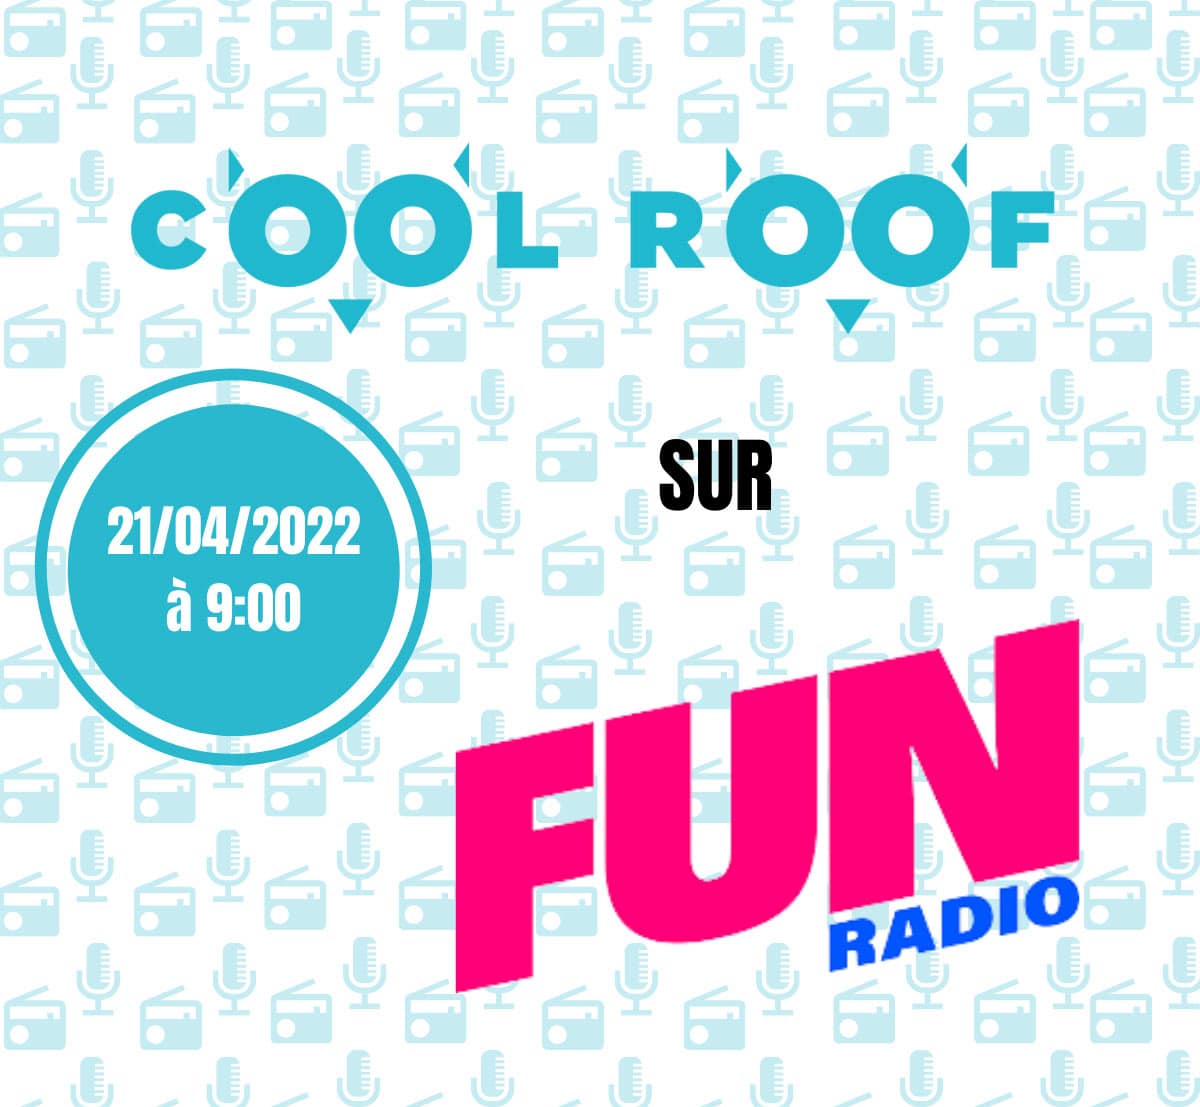 Cool Roof sur … Fun Radio